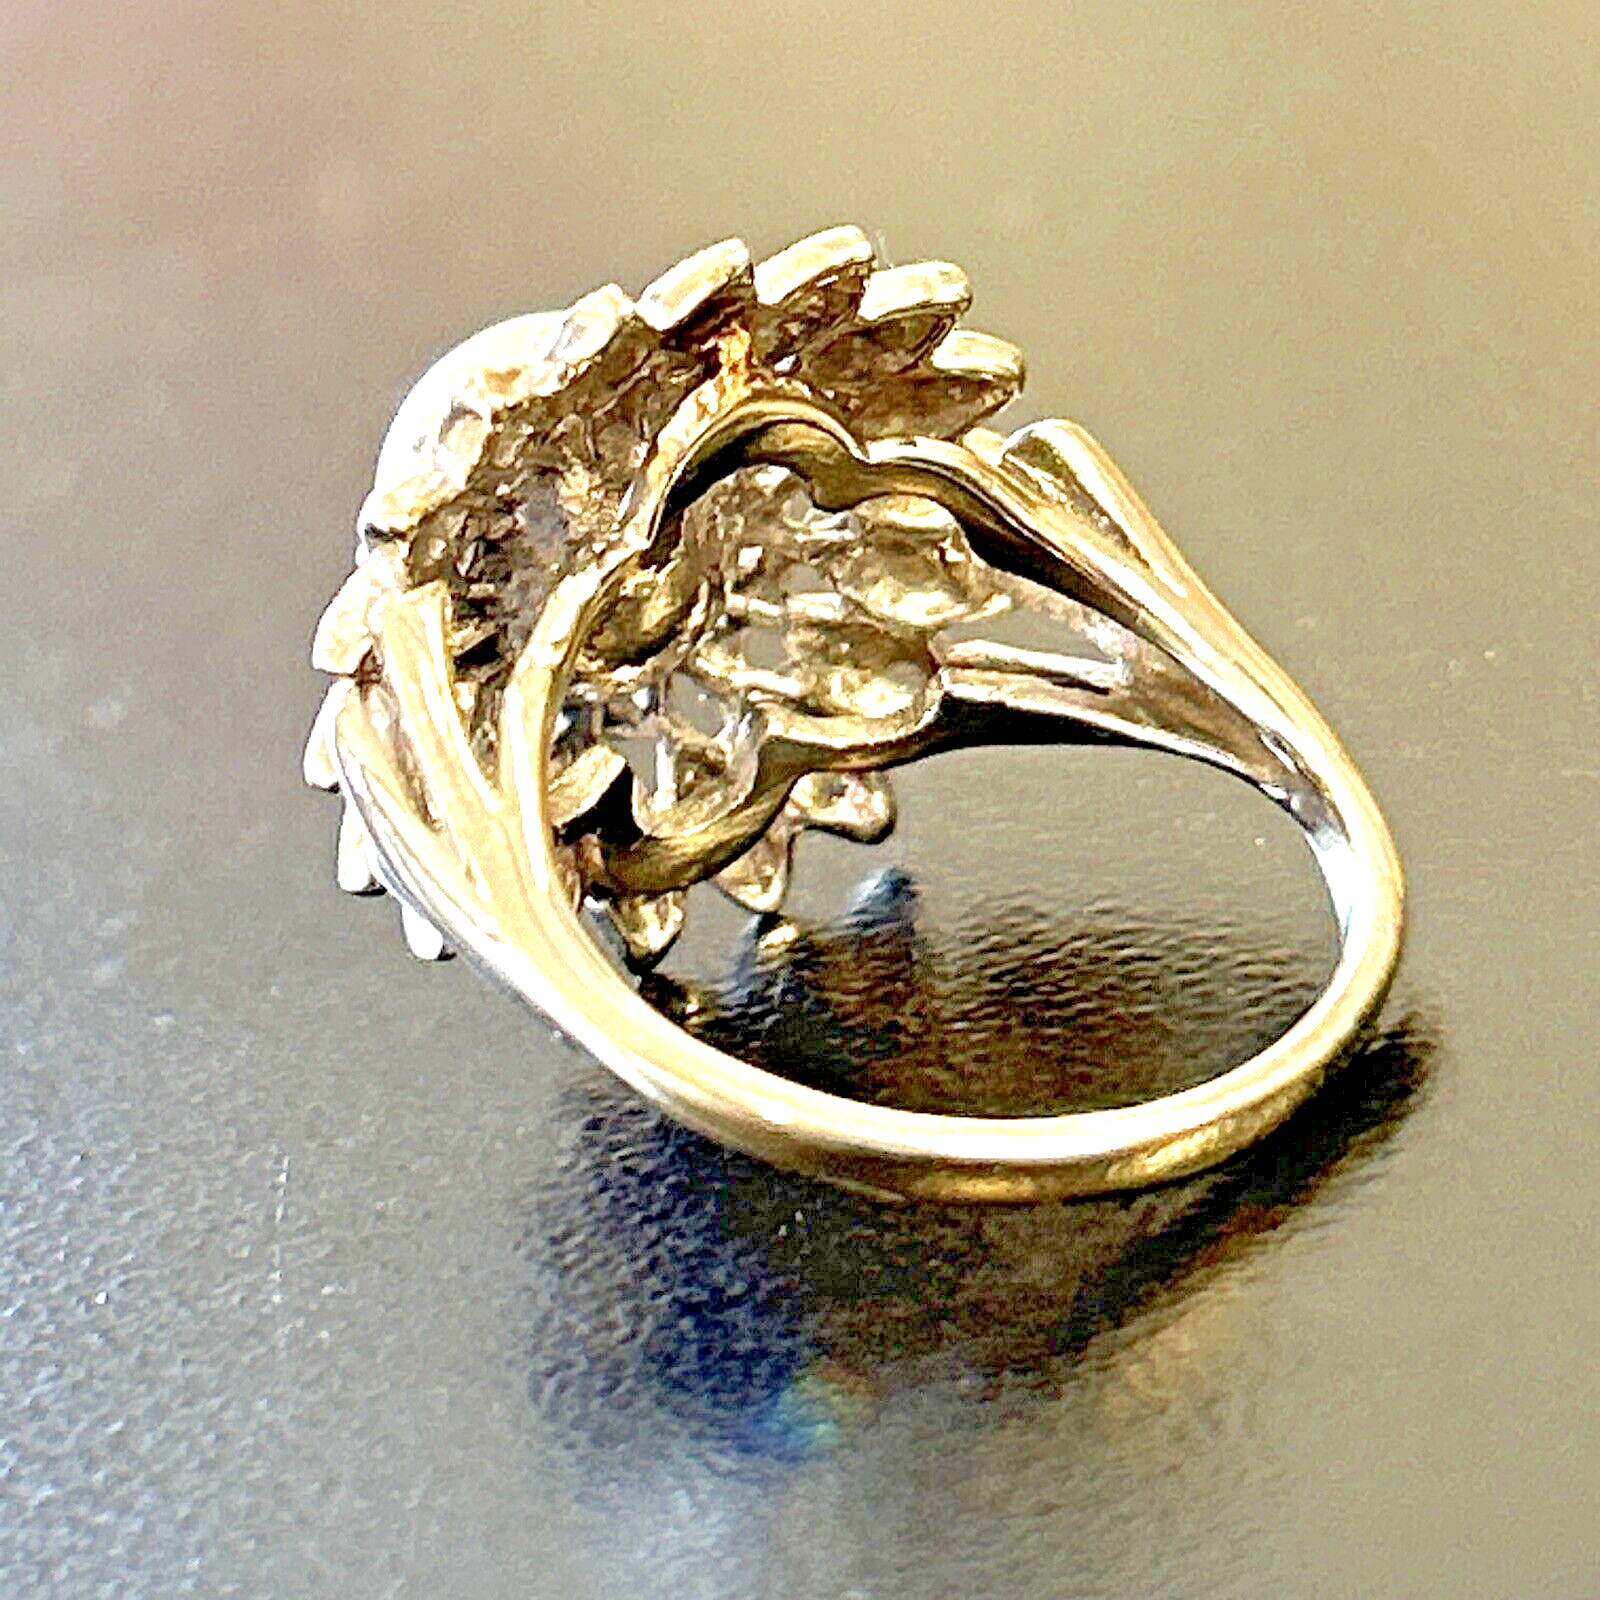 14k White Gold Pearl & Diamond Cocktail Ring Size 6 - 5.7 Grams